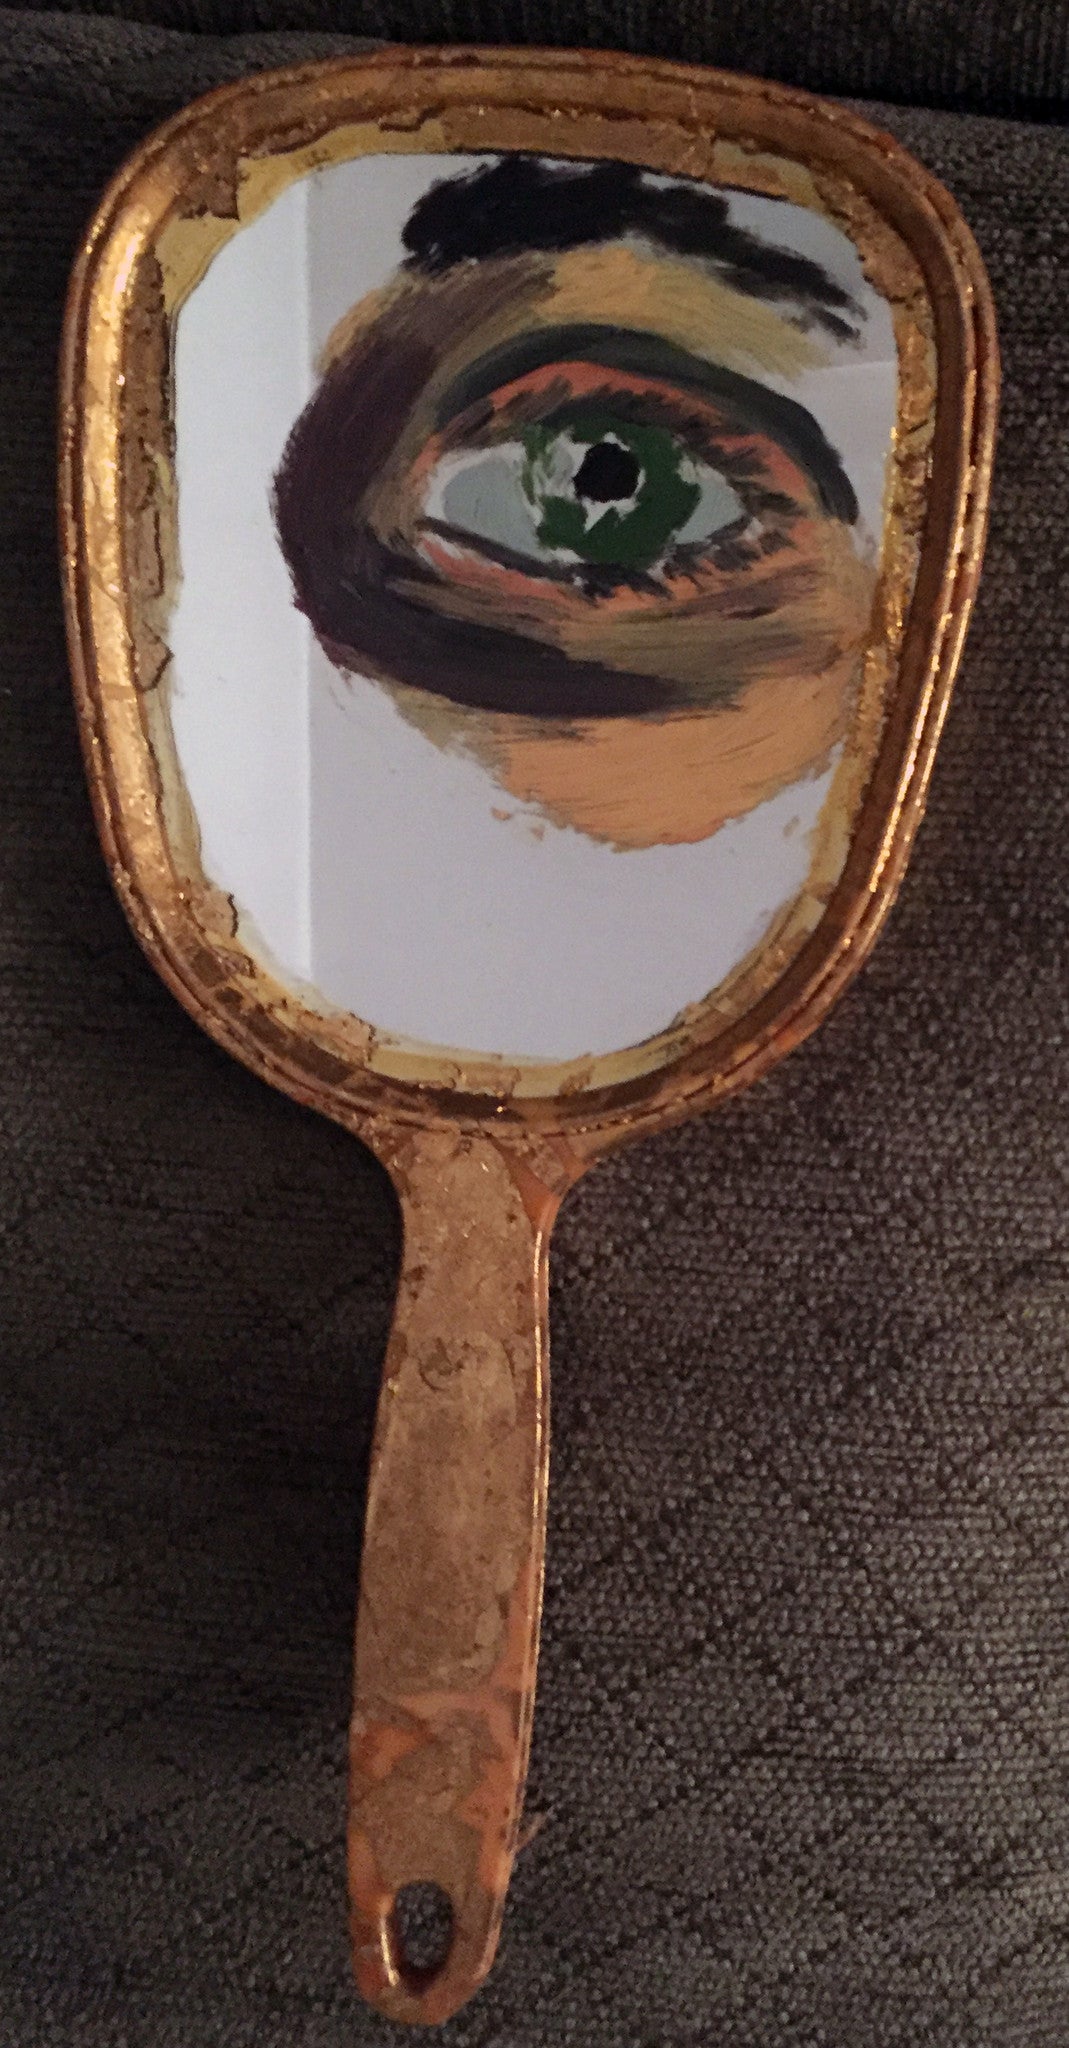 Jane Dickson, "Flaw Mirror: Eye"